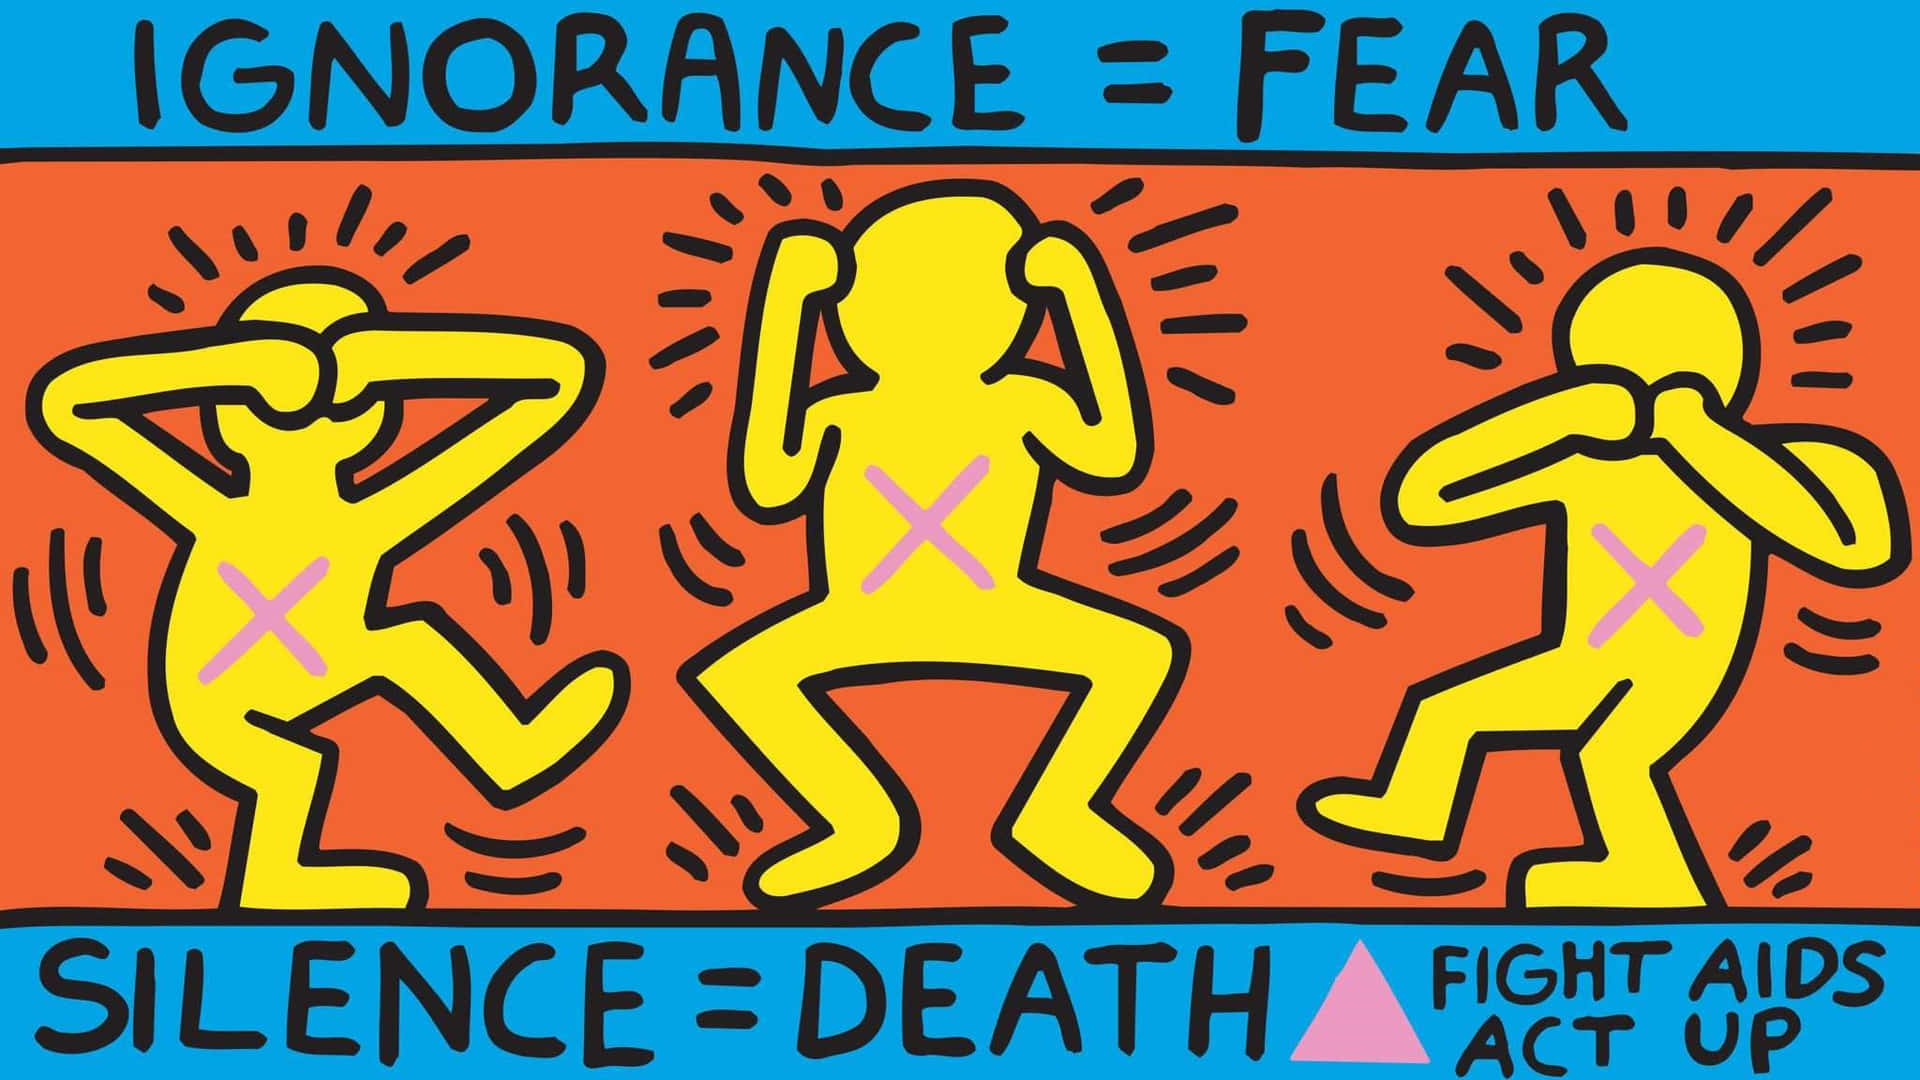 Keith Haring Ignorance Fear Artwork Wallpaper